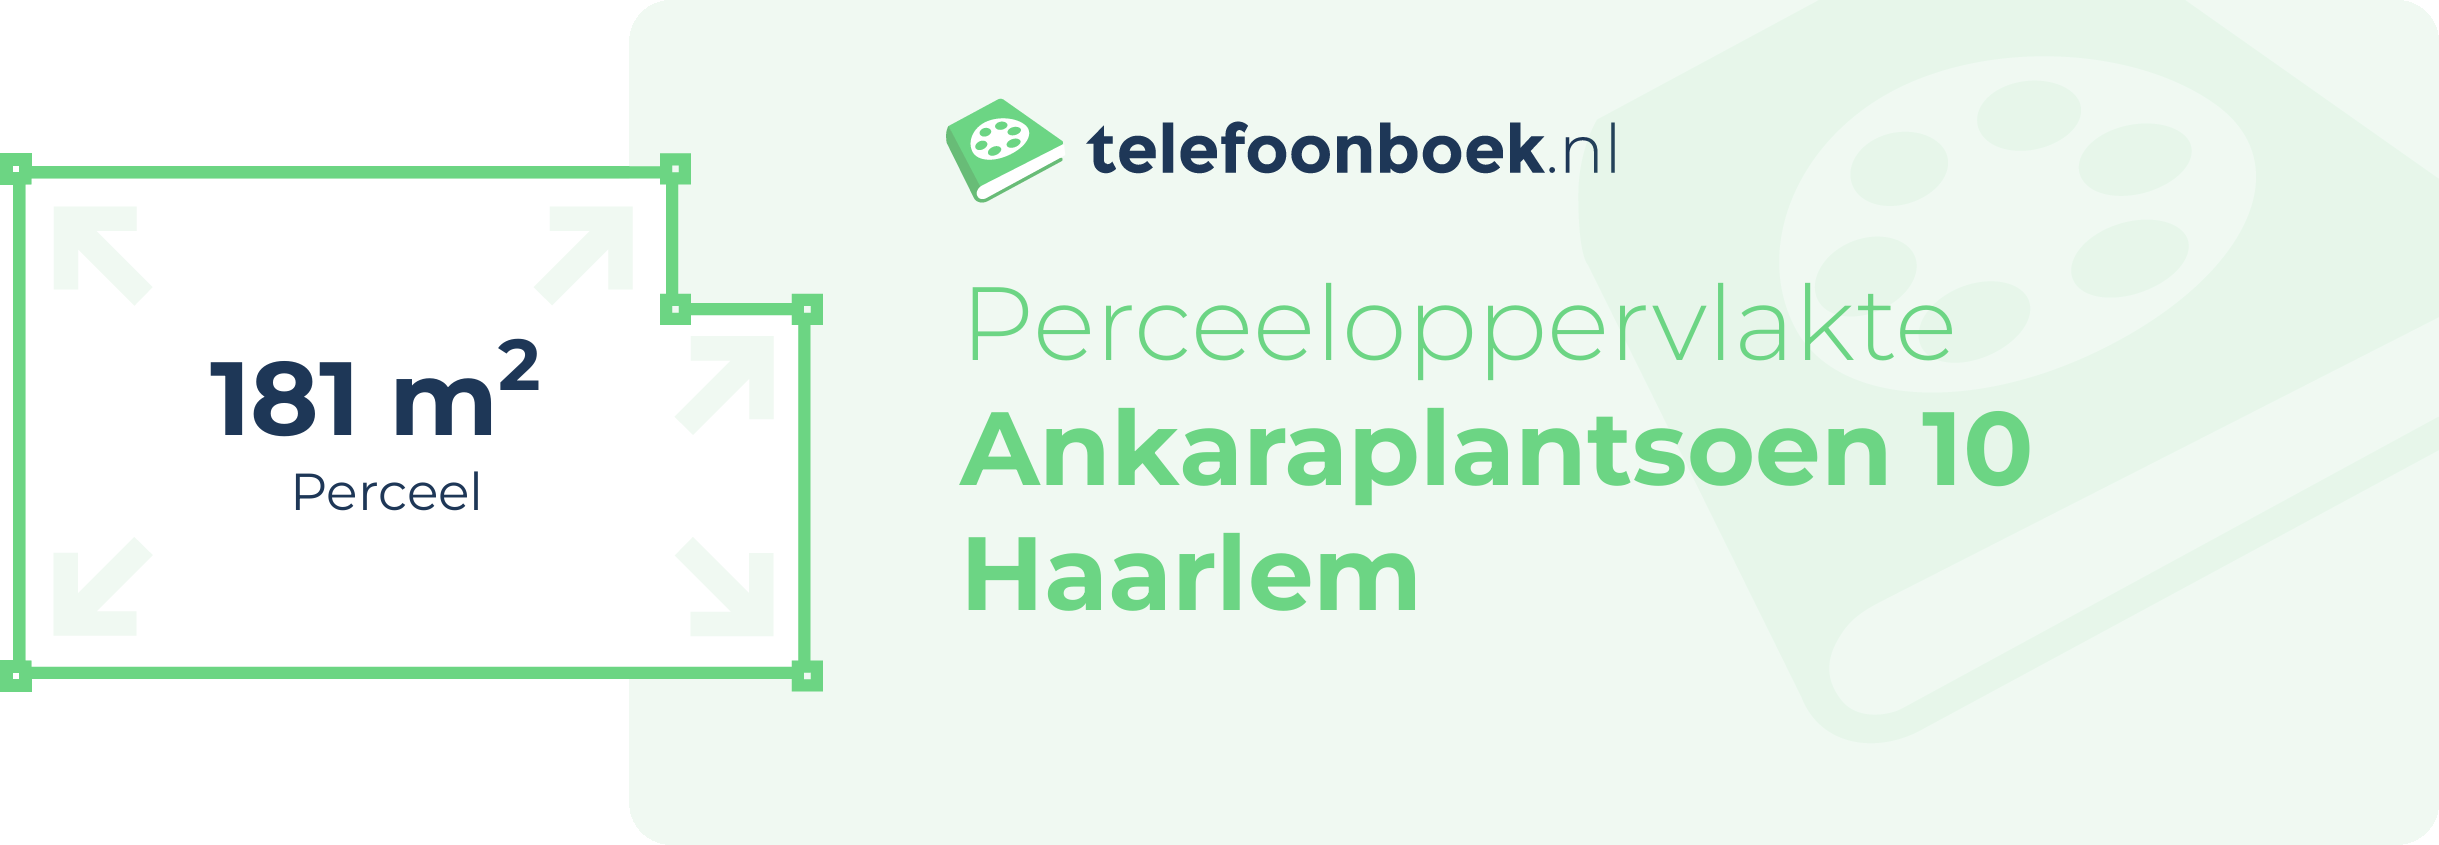 Perceeloppervlakte Ankaraplantsoen 10 Haarlem